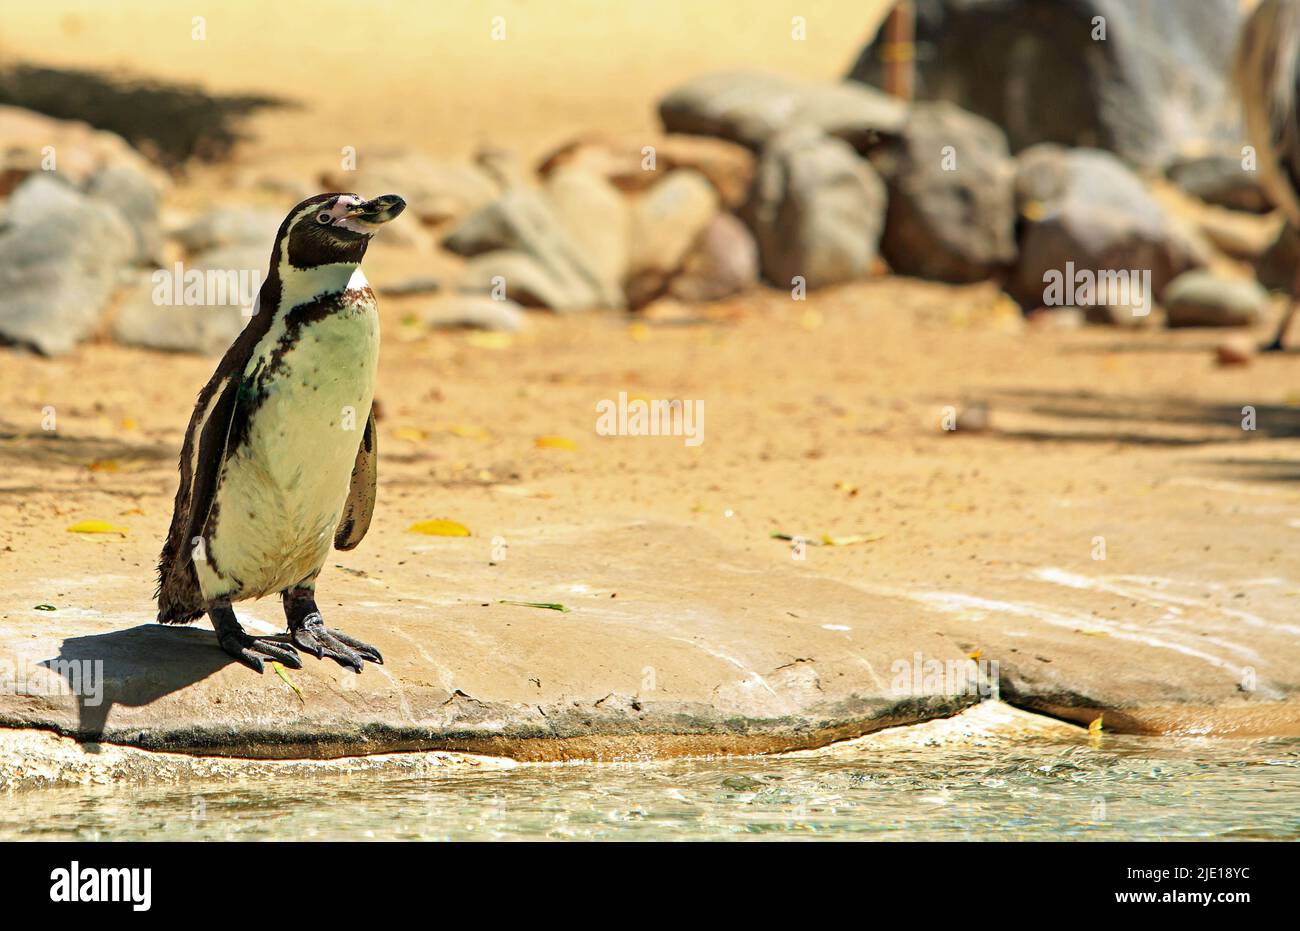 Humboldt Penguin standing by the waters edge -  Latin name Spheniscus humboldti Stock Photo